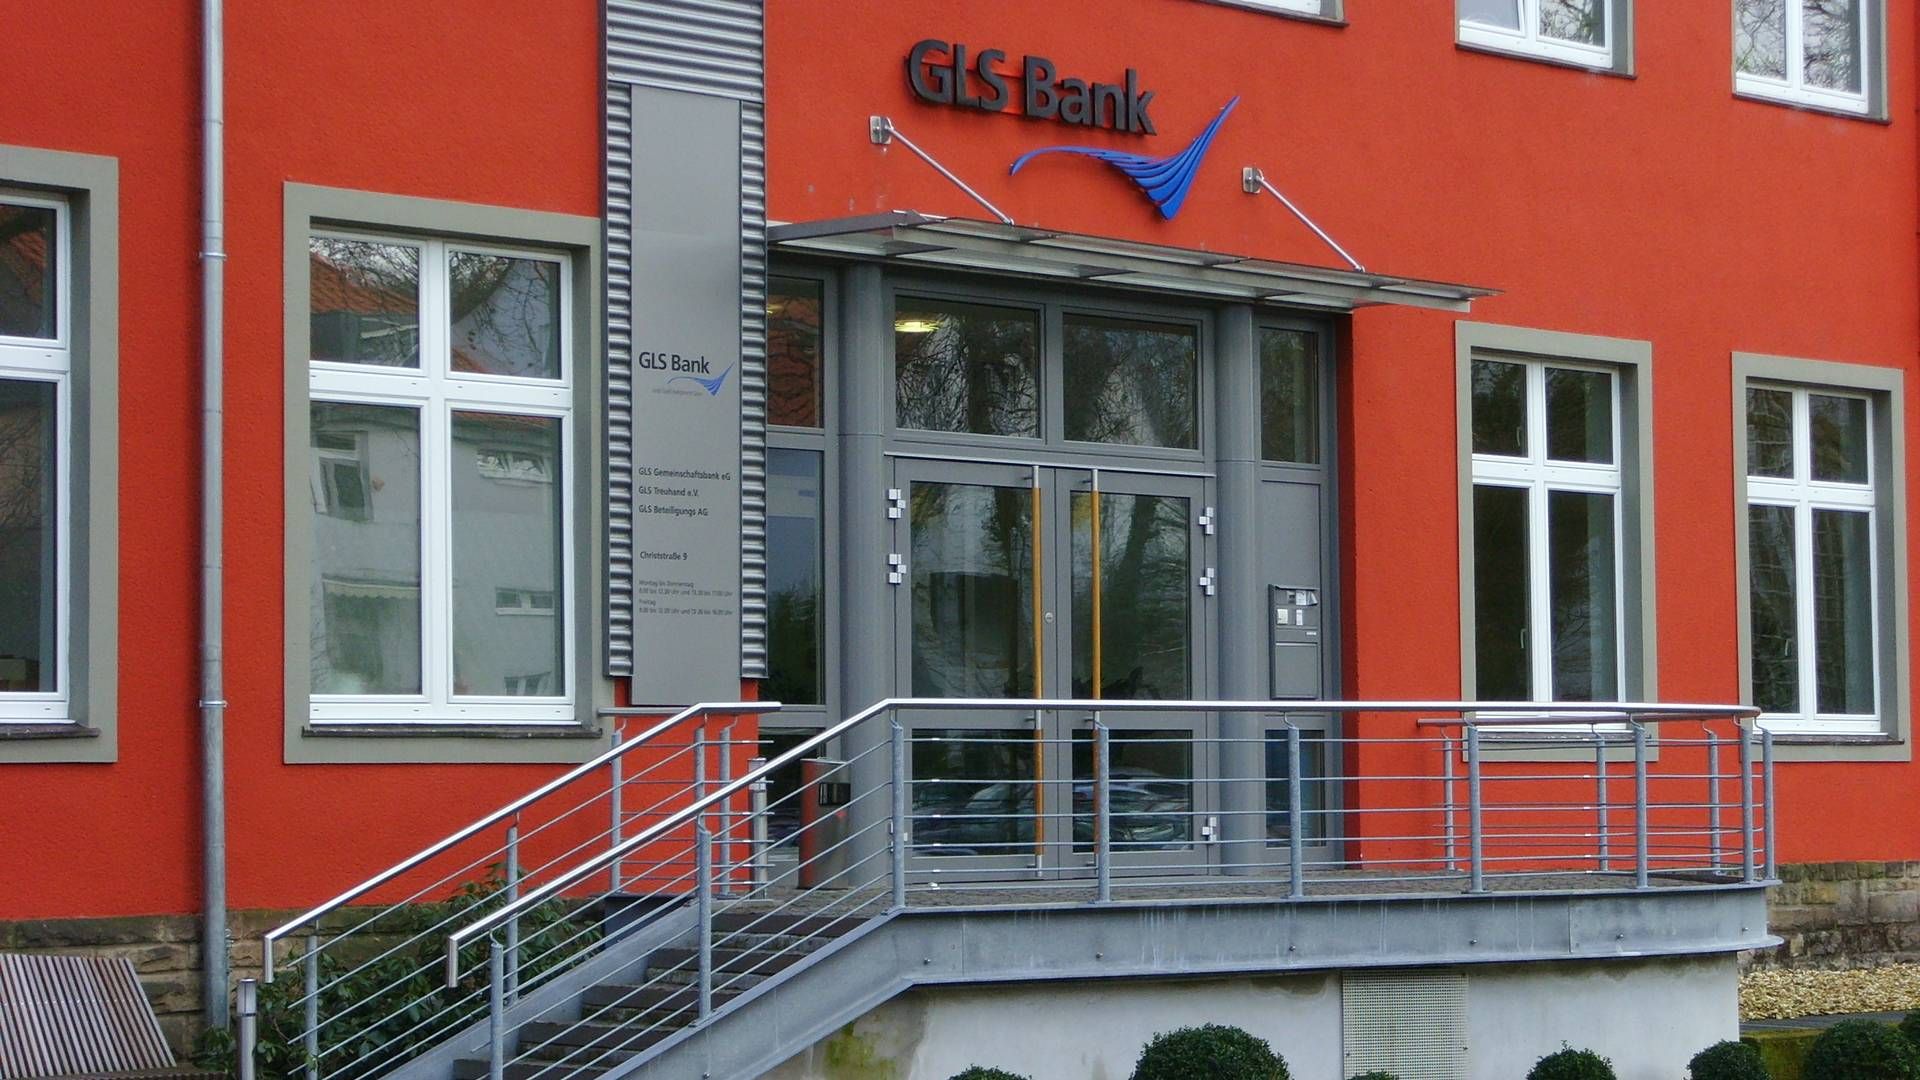 Die Zentrale der GLS Bank in Bochum | Foto: Maschinenjunge, GFDL, CC-BY-SA 3.0, Wikimedia Commons